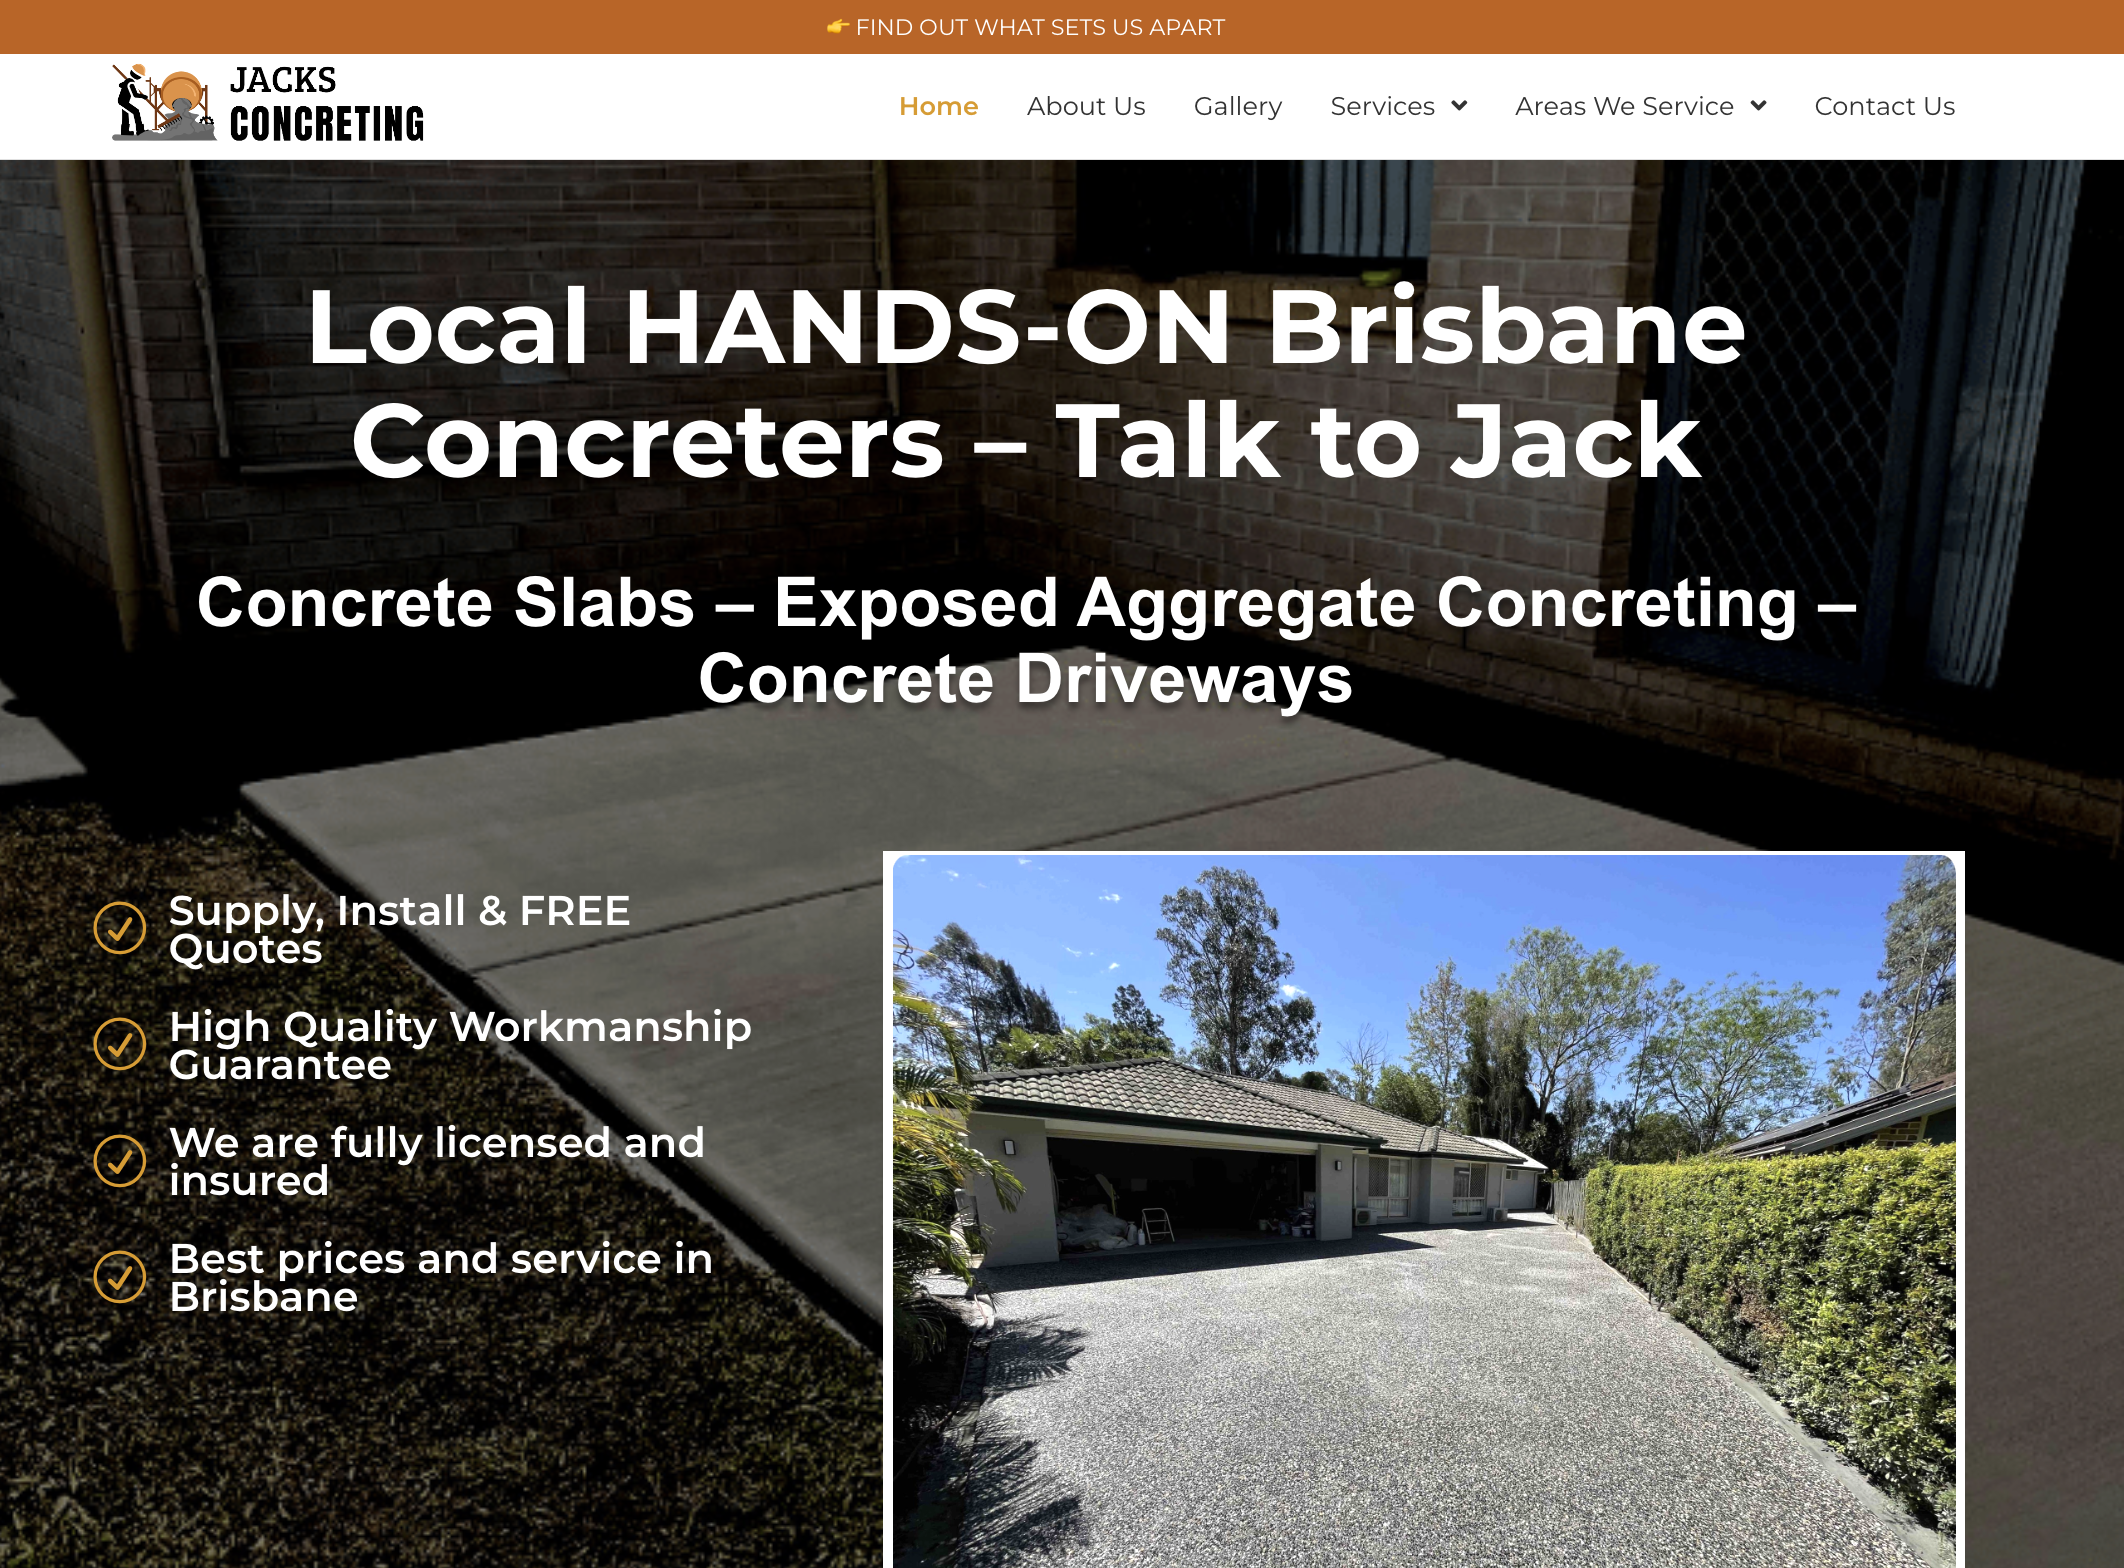 jacksconcreting - Concreter from Brisbane